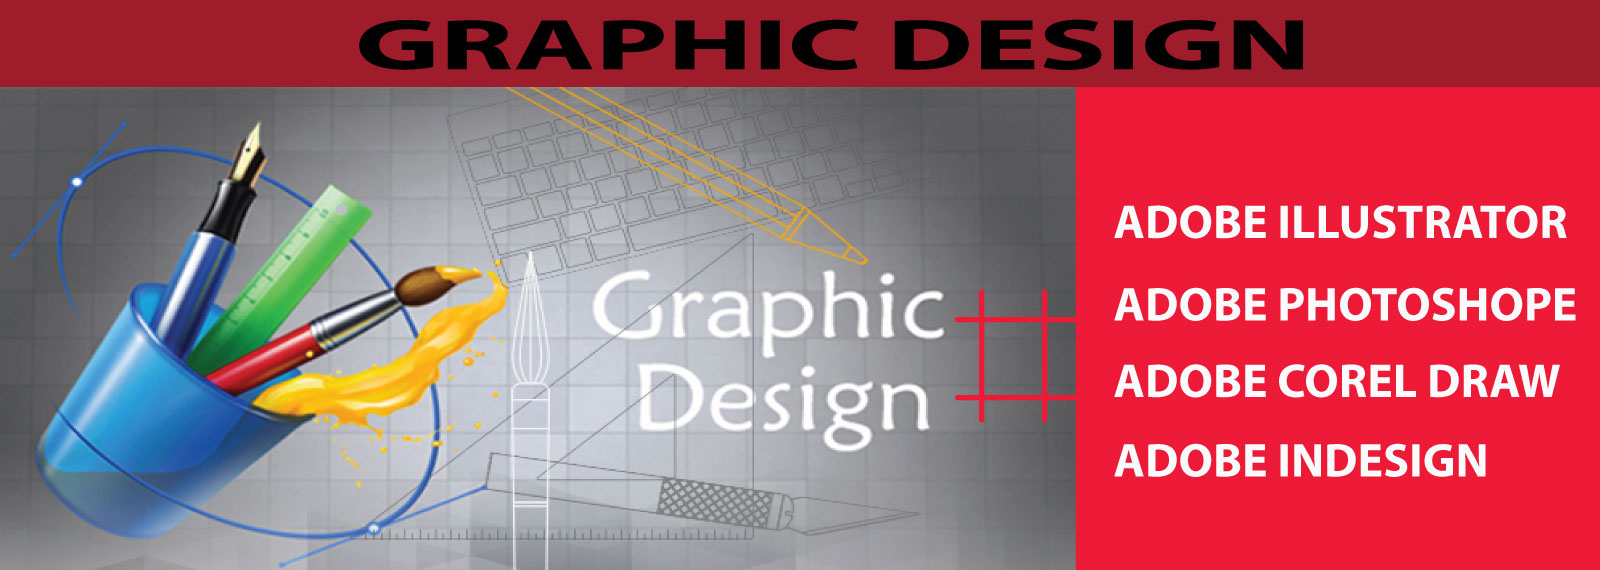 Web Design course in Delhi | Graphic Design training Institute Course in Laxmi Nagar Delhi,Delhi.Education and LearningProfessional CoursesEast DelhiPreet Vihar